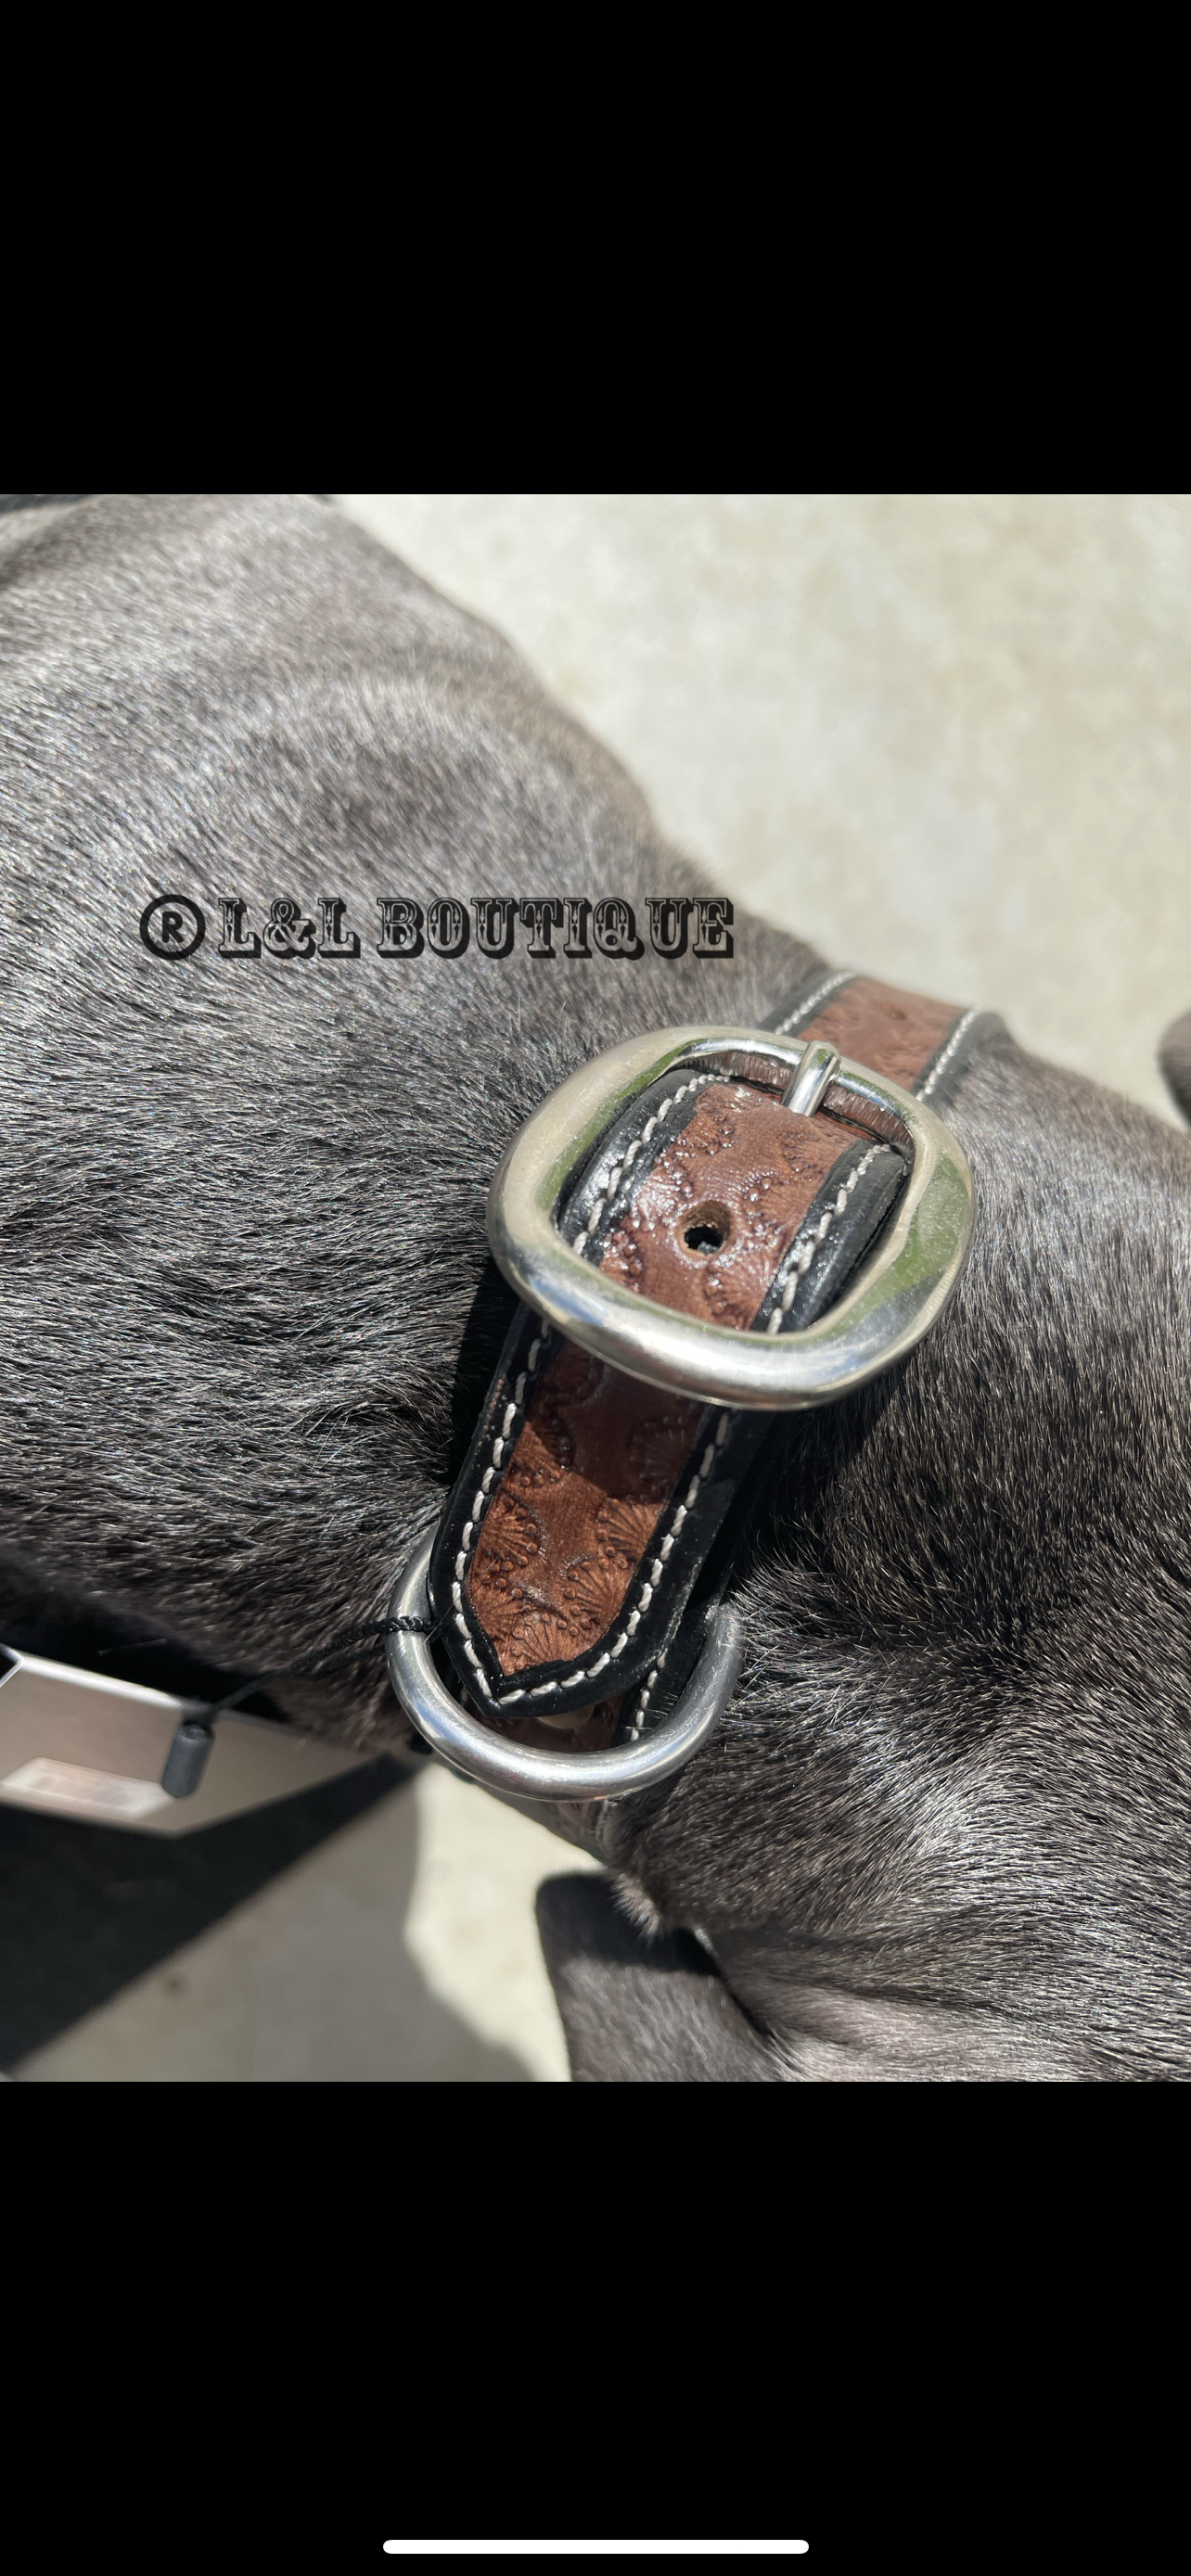 Scenic Leather Dog Collar